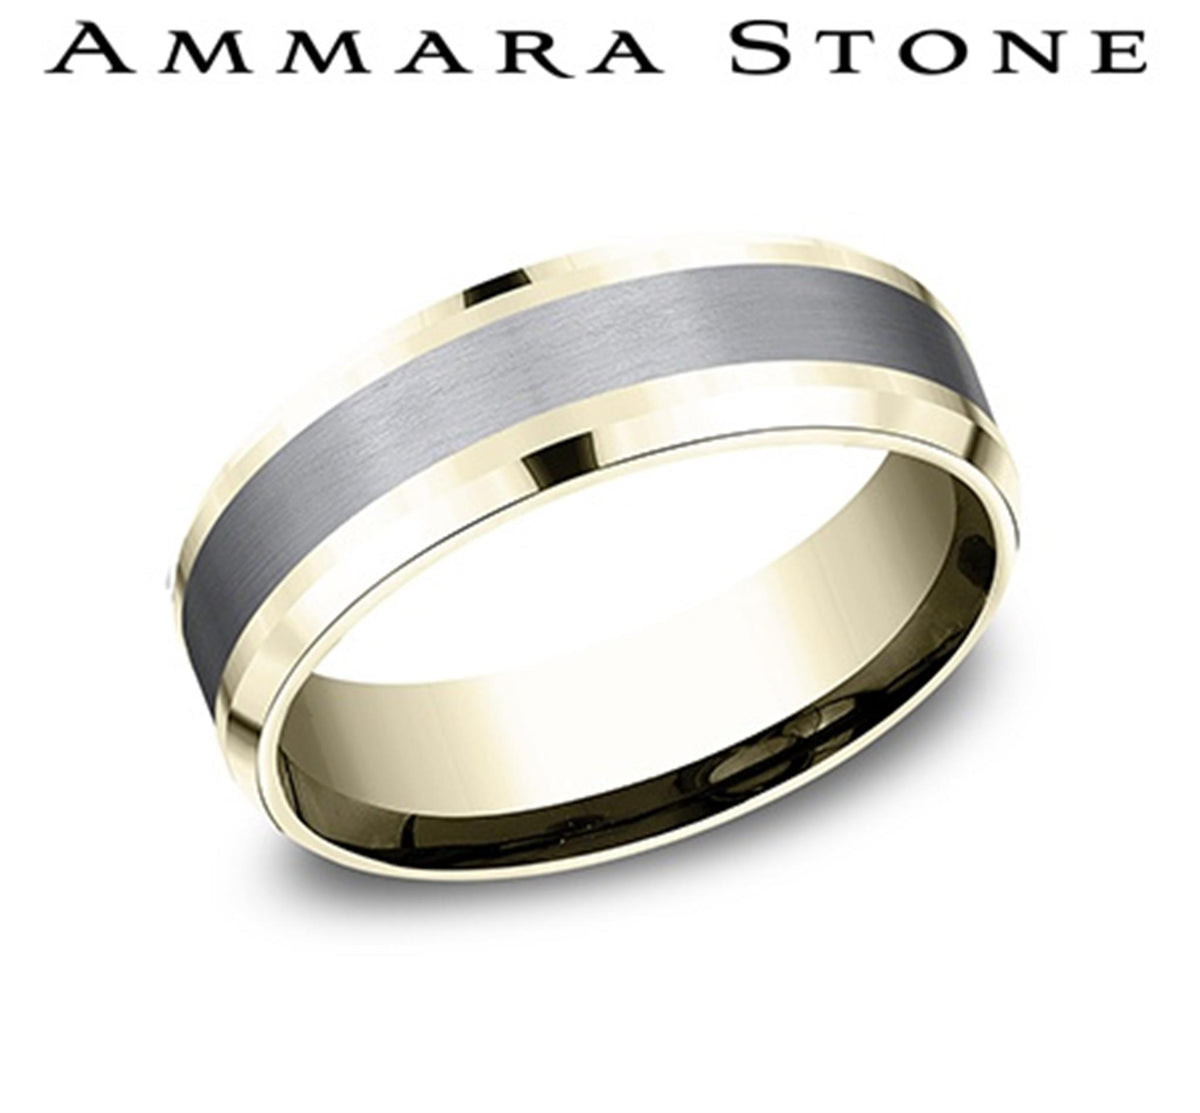 Ammara Stone 7Mm Beveled 14Ky Gold & Gray Tantalum Band